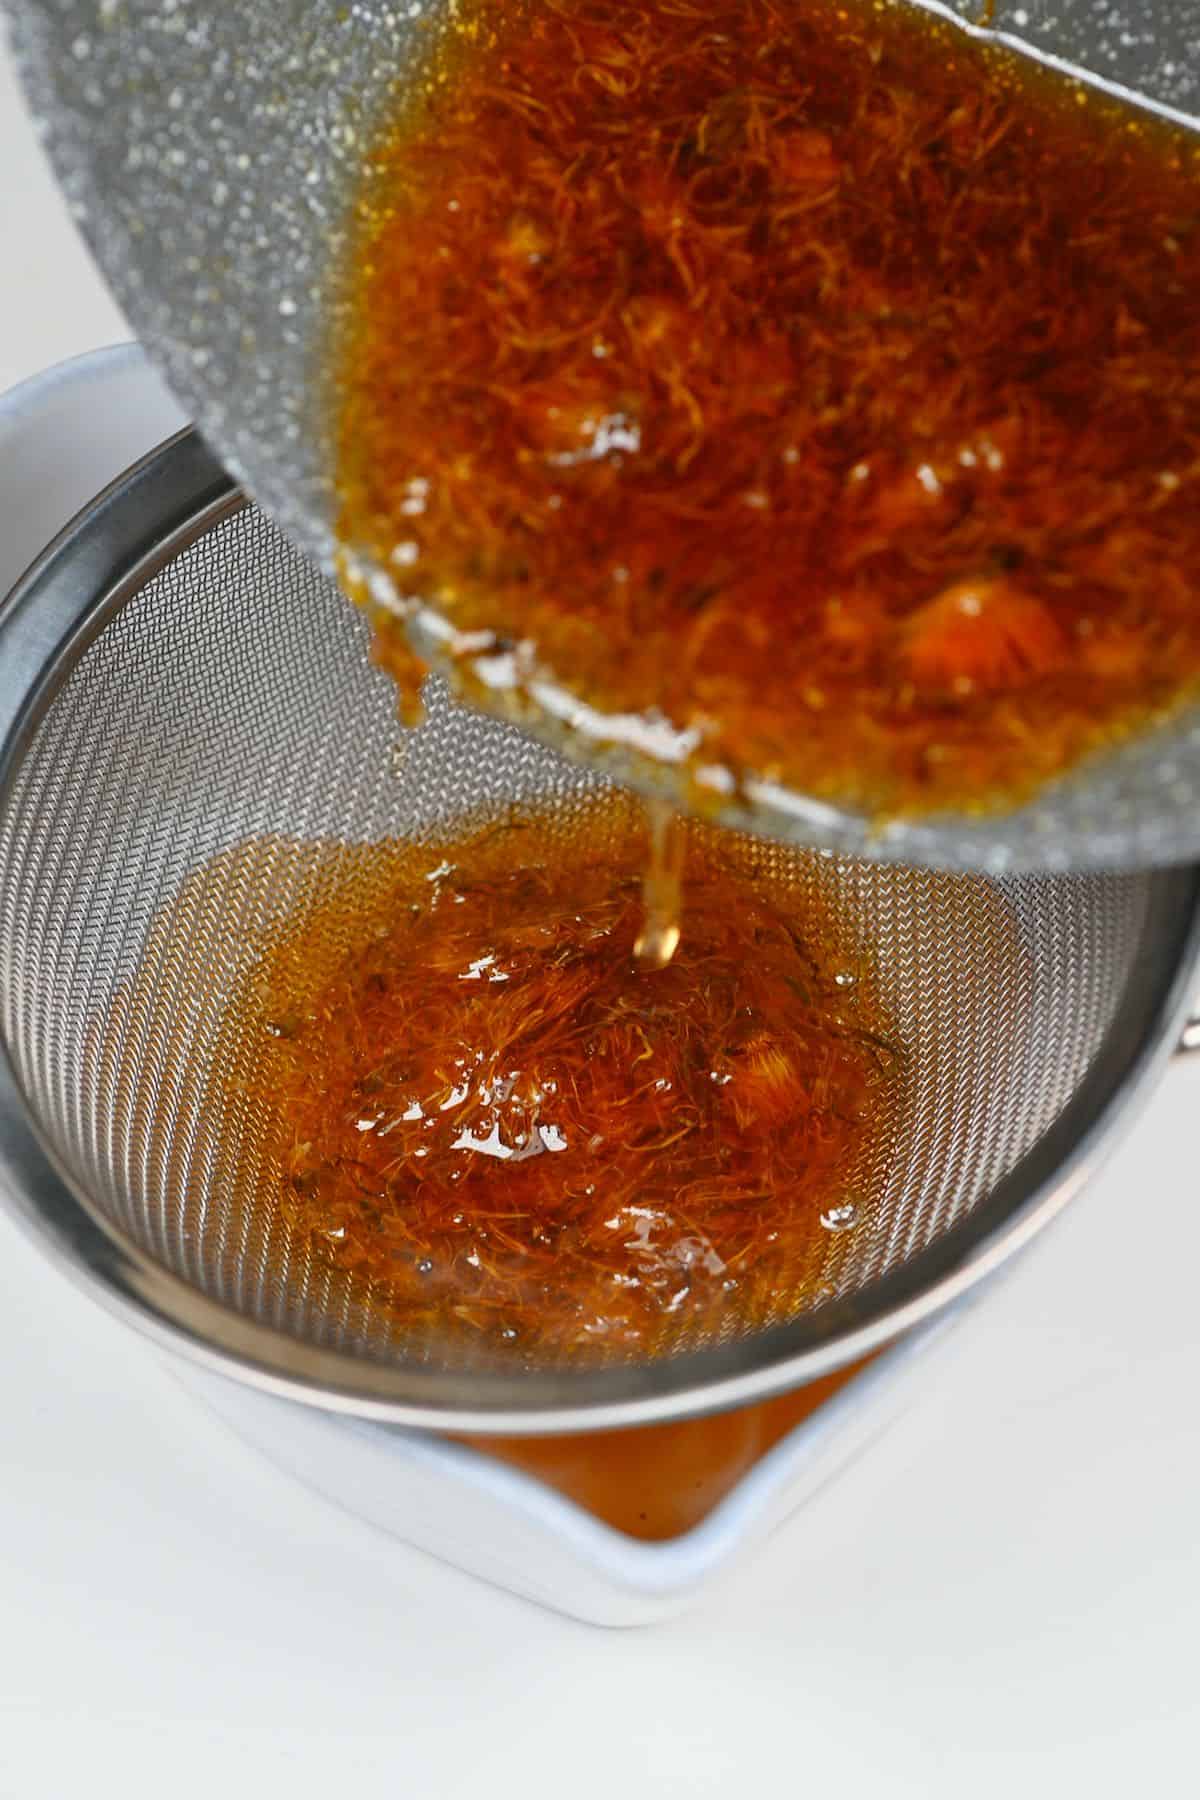 Sieving dandelion syrup